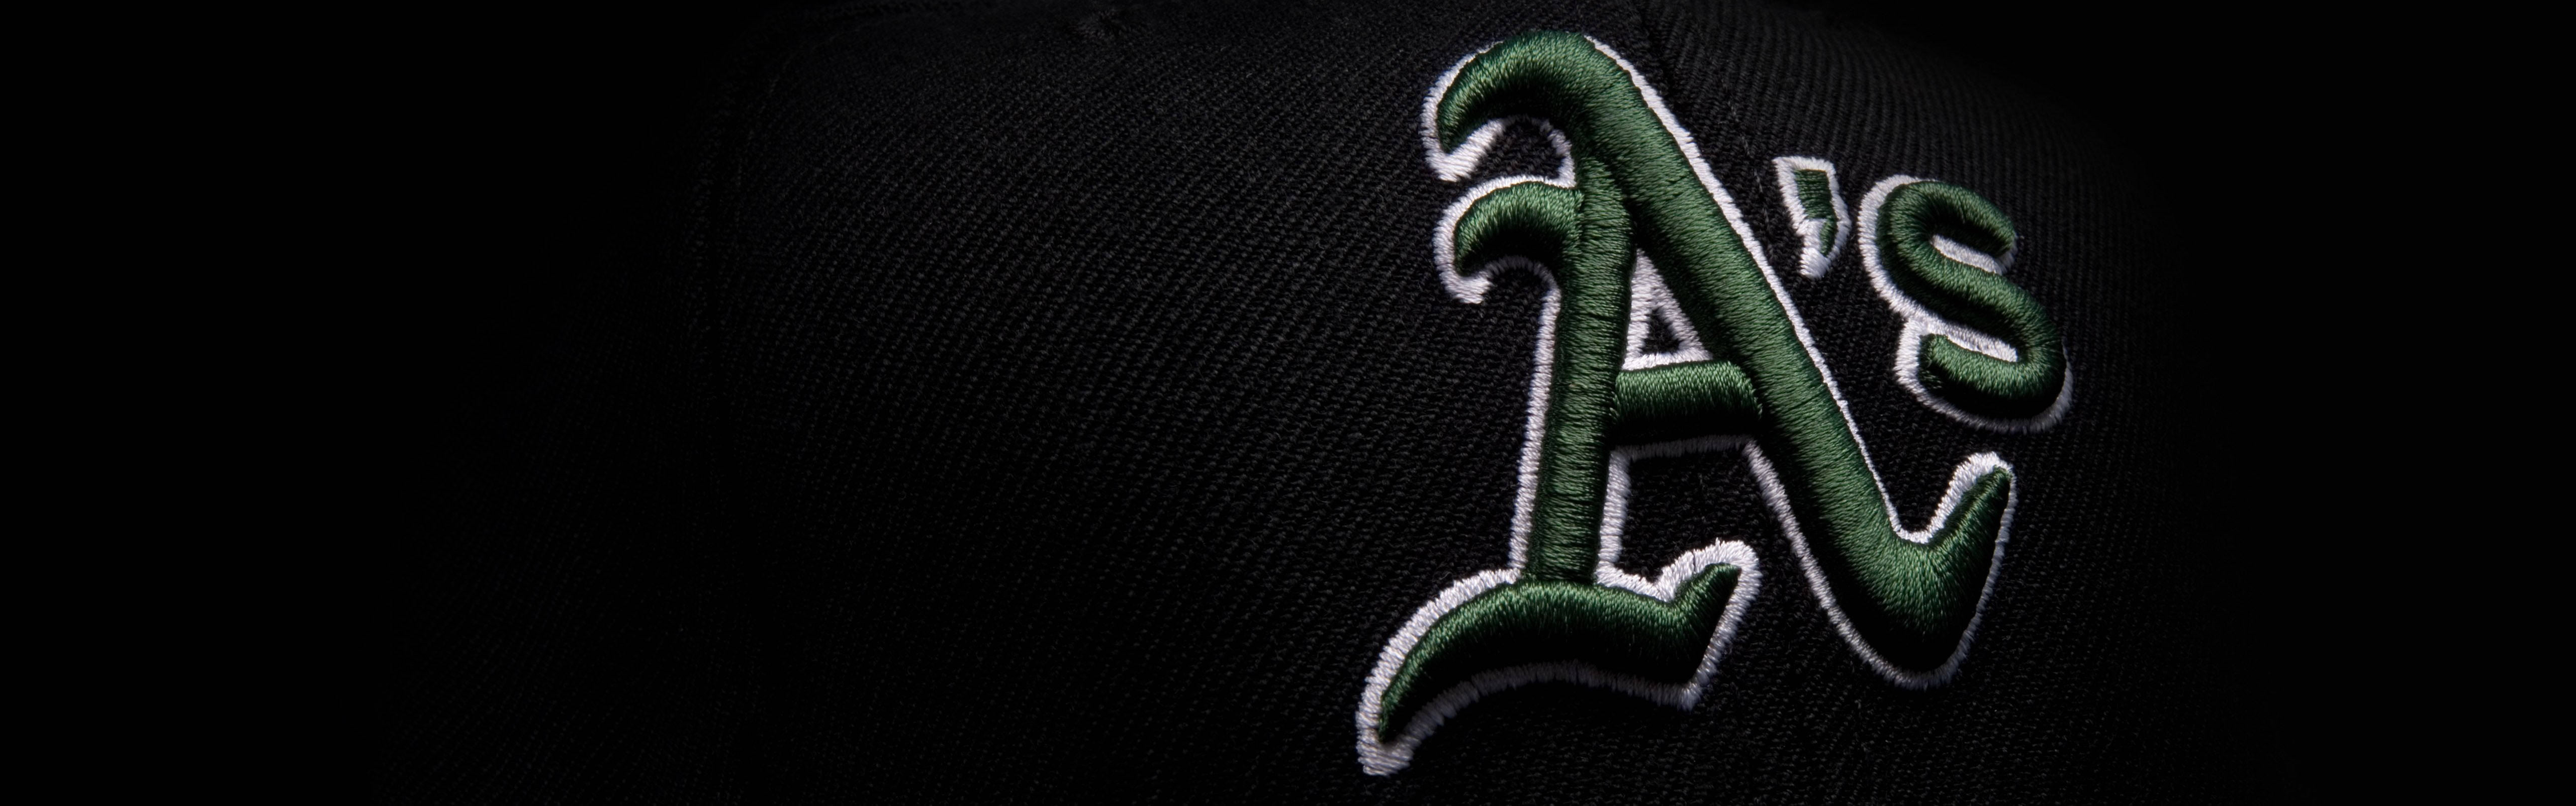 Oakland Athletics Embroidered Hat Background